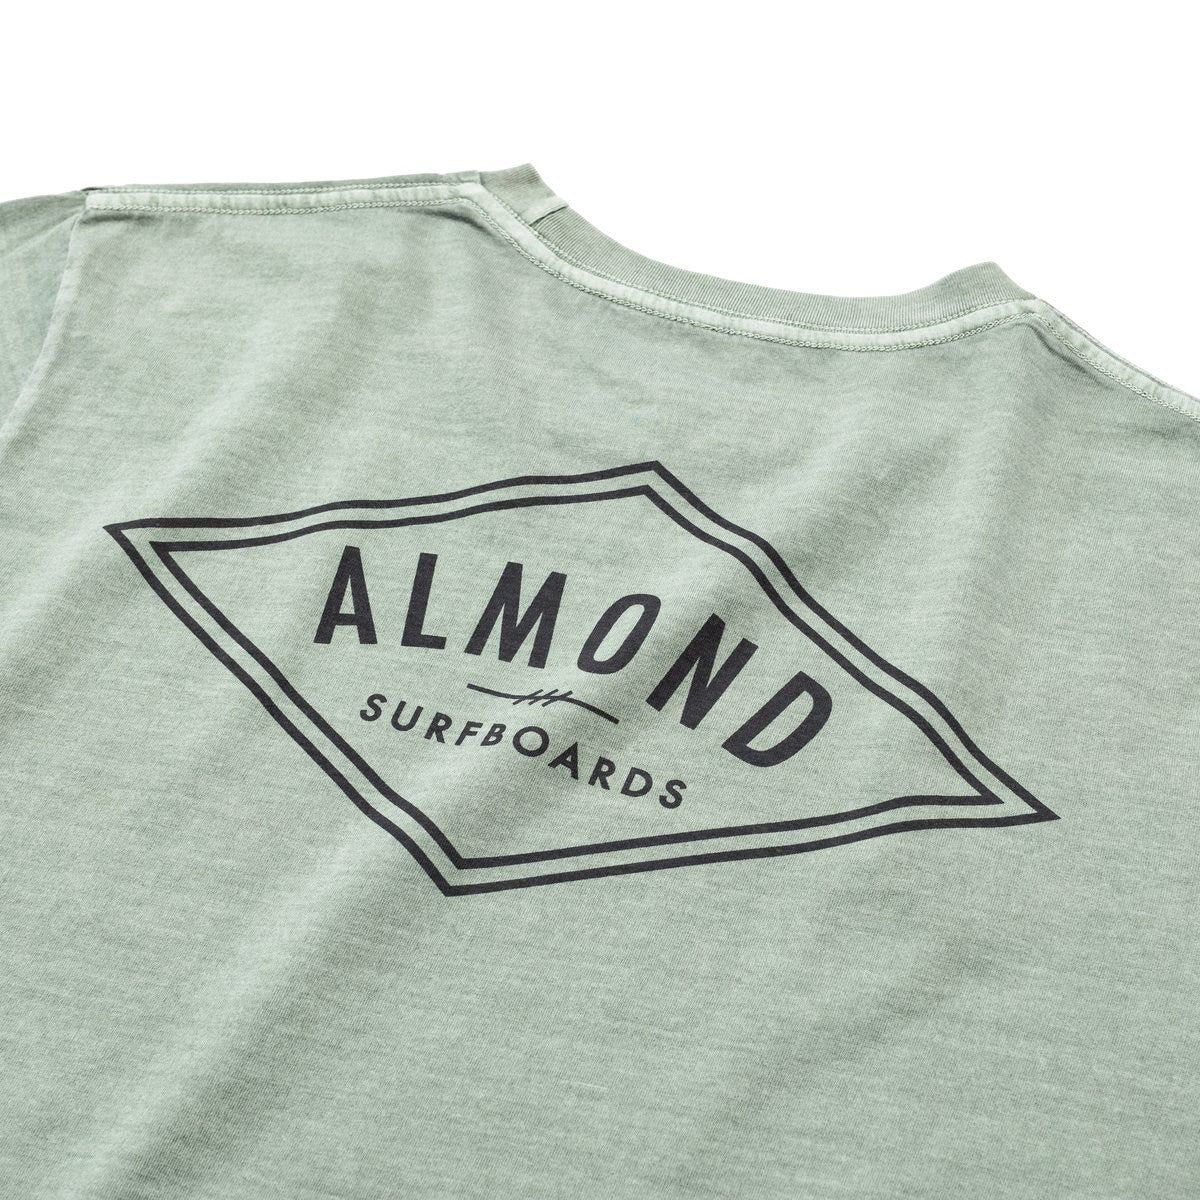 Almond Surfboards - Decades Tee - Sage